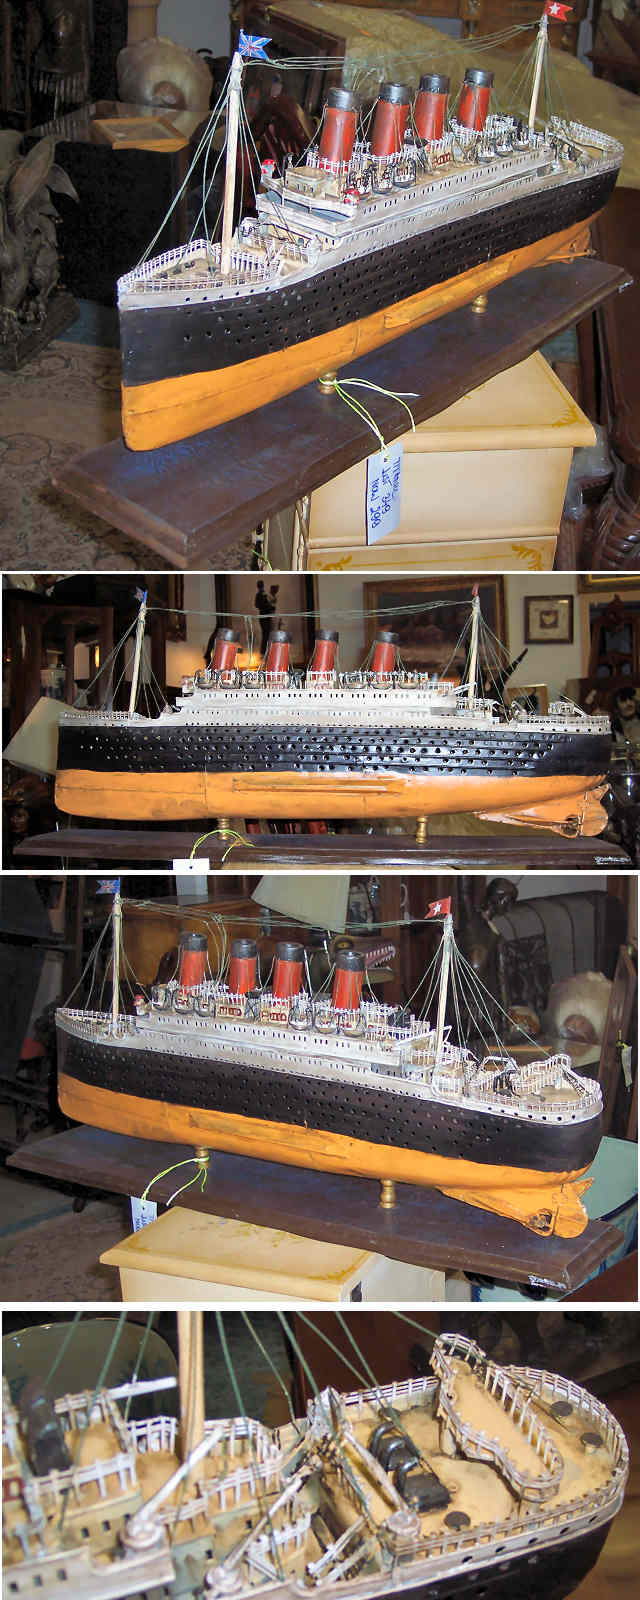 Tin Model of "Titanic"